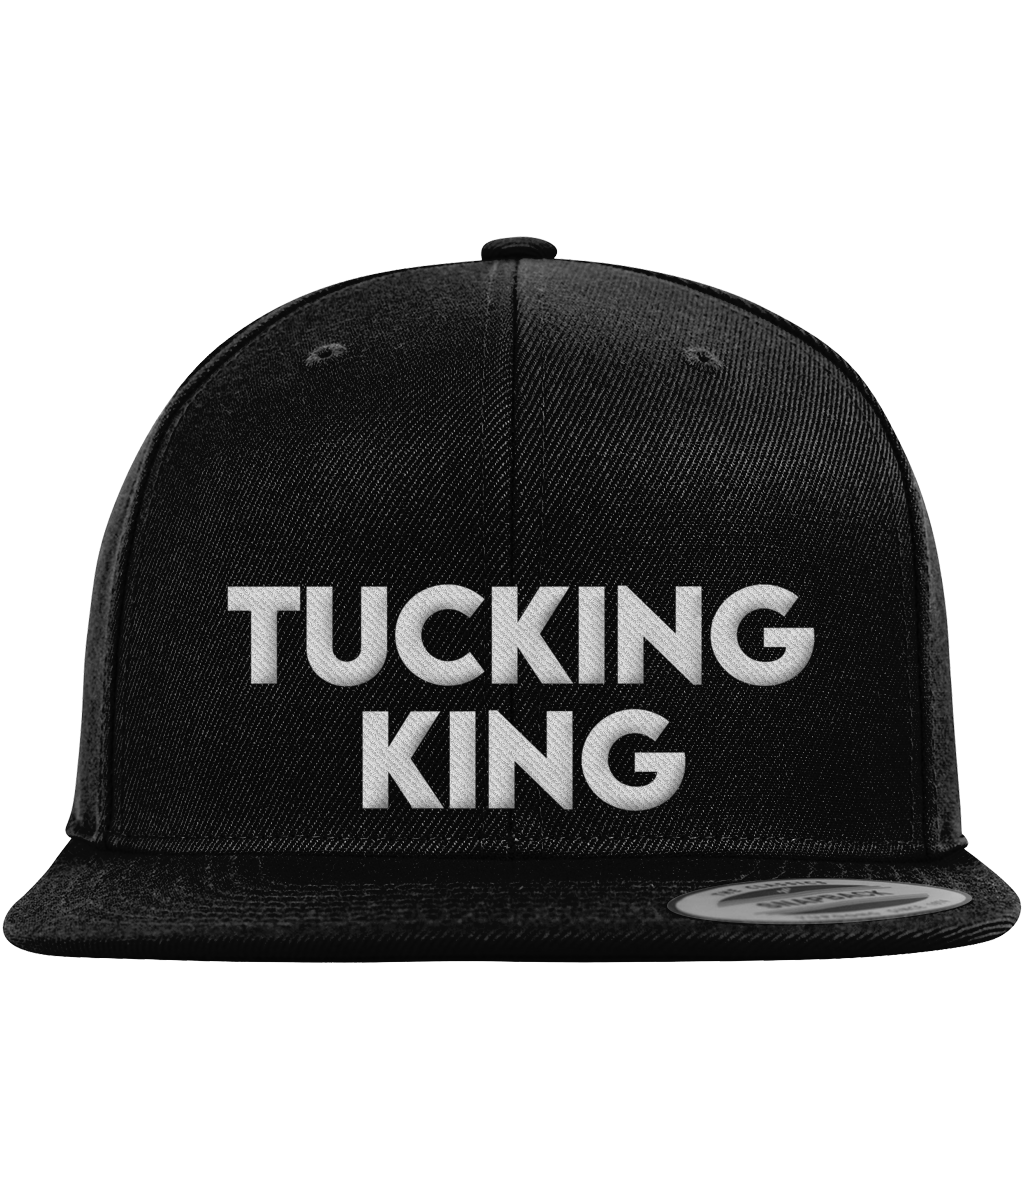 Rob Raven 'Tucking King' Premium Classic Snapback